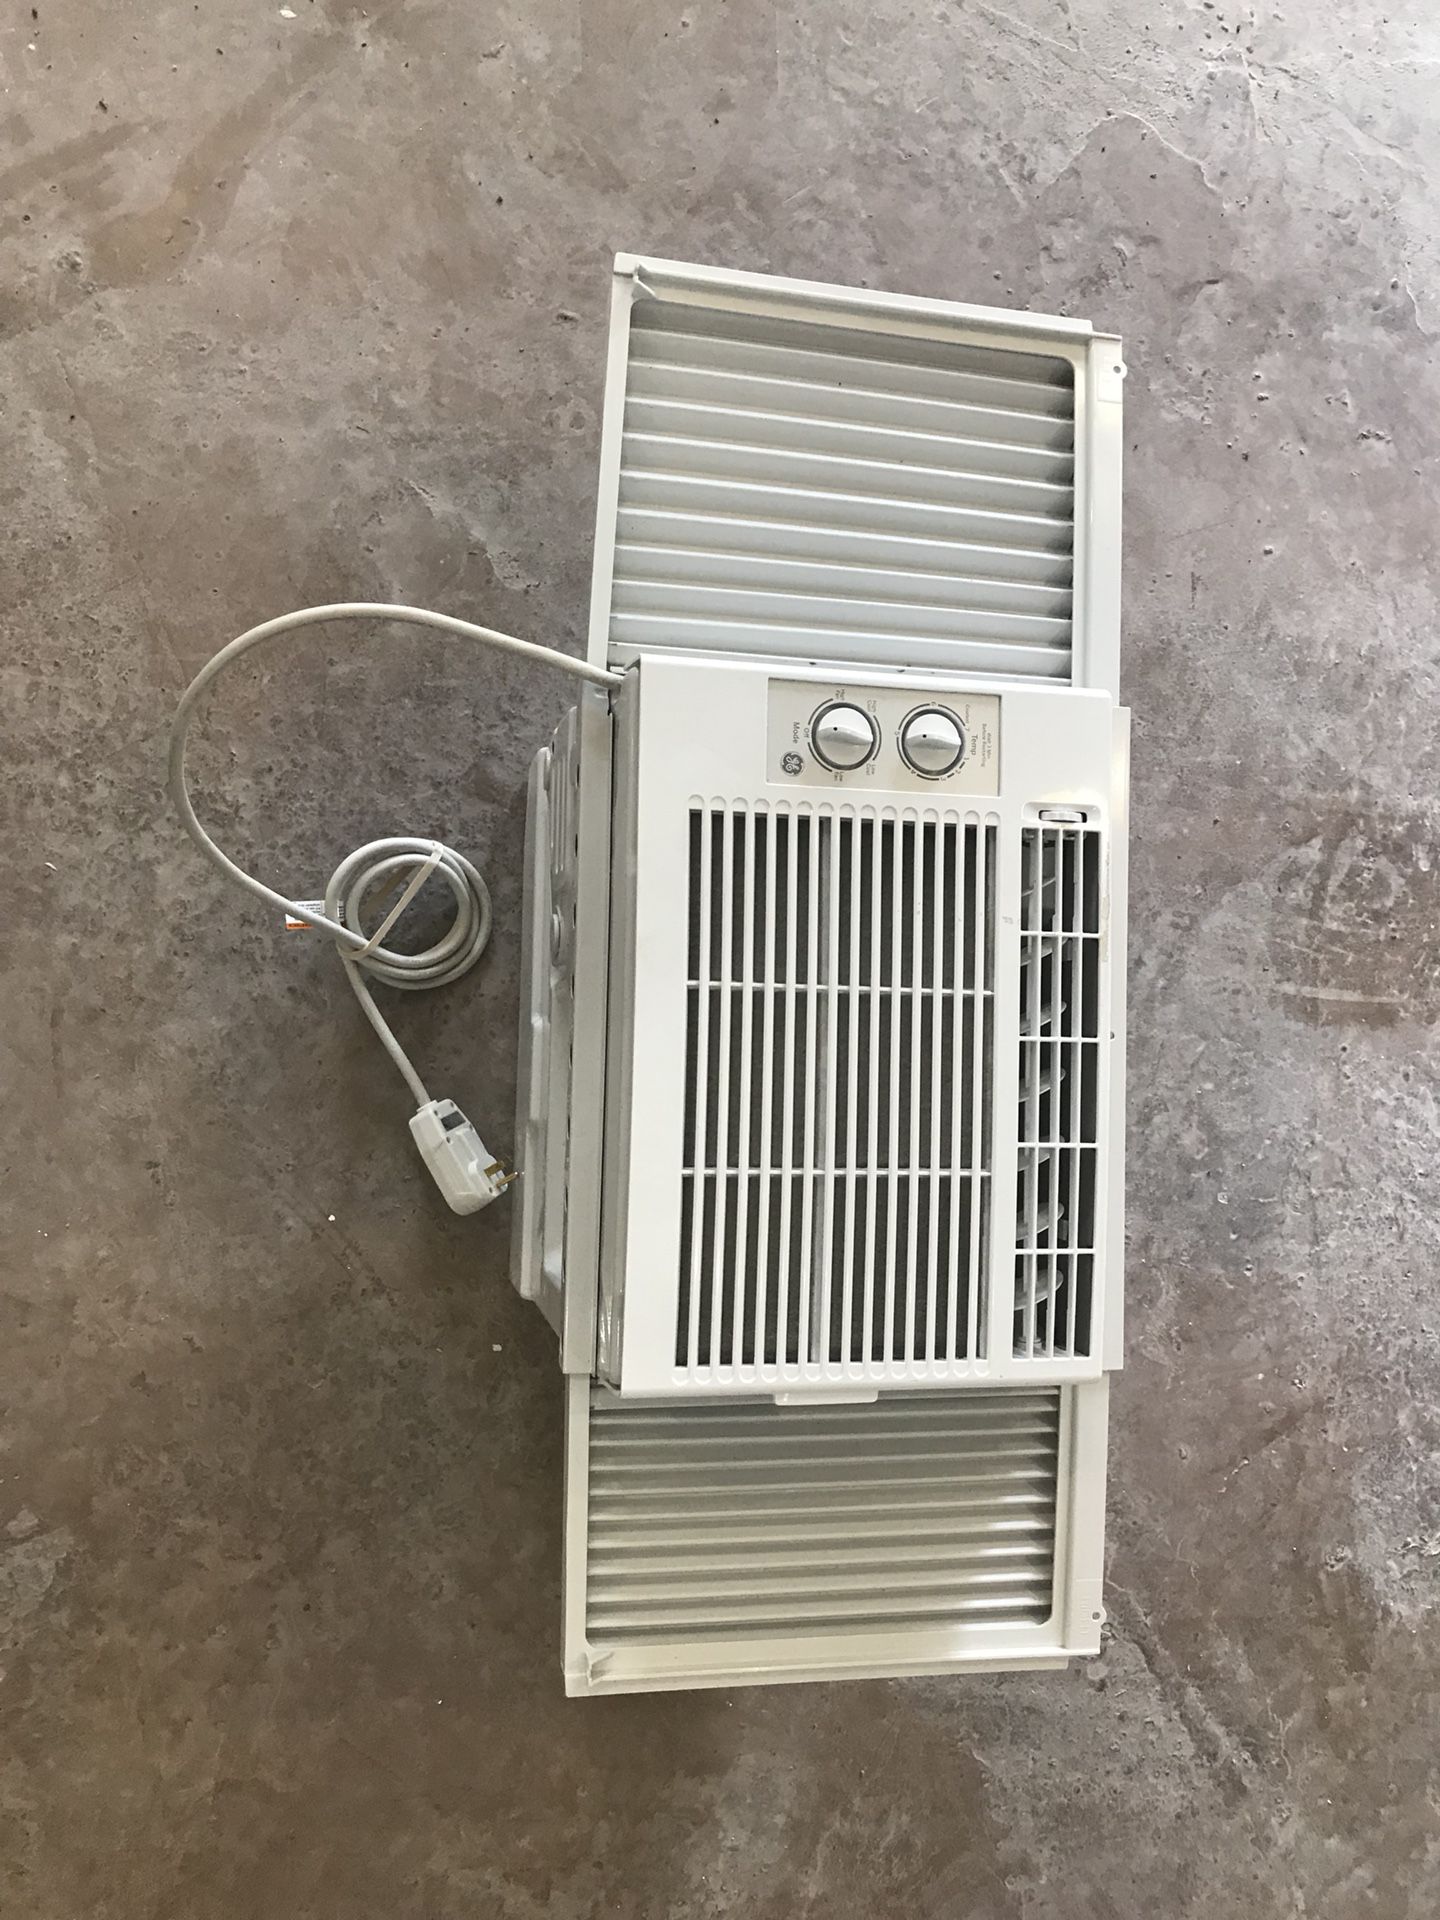 GE 5000 btu window air conditioner 110v model AEY05lvq1